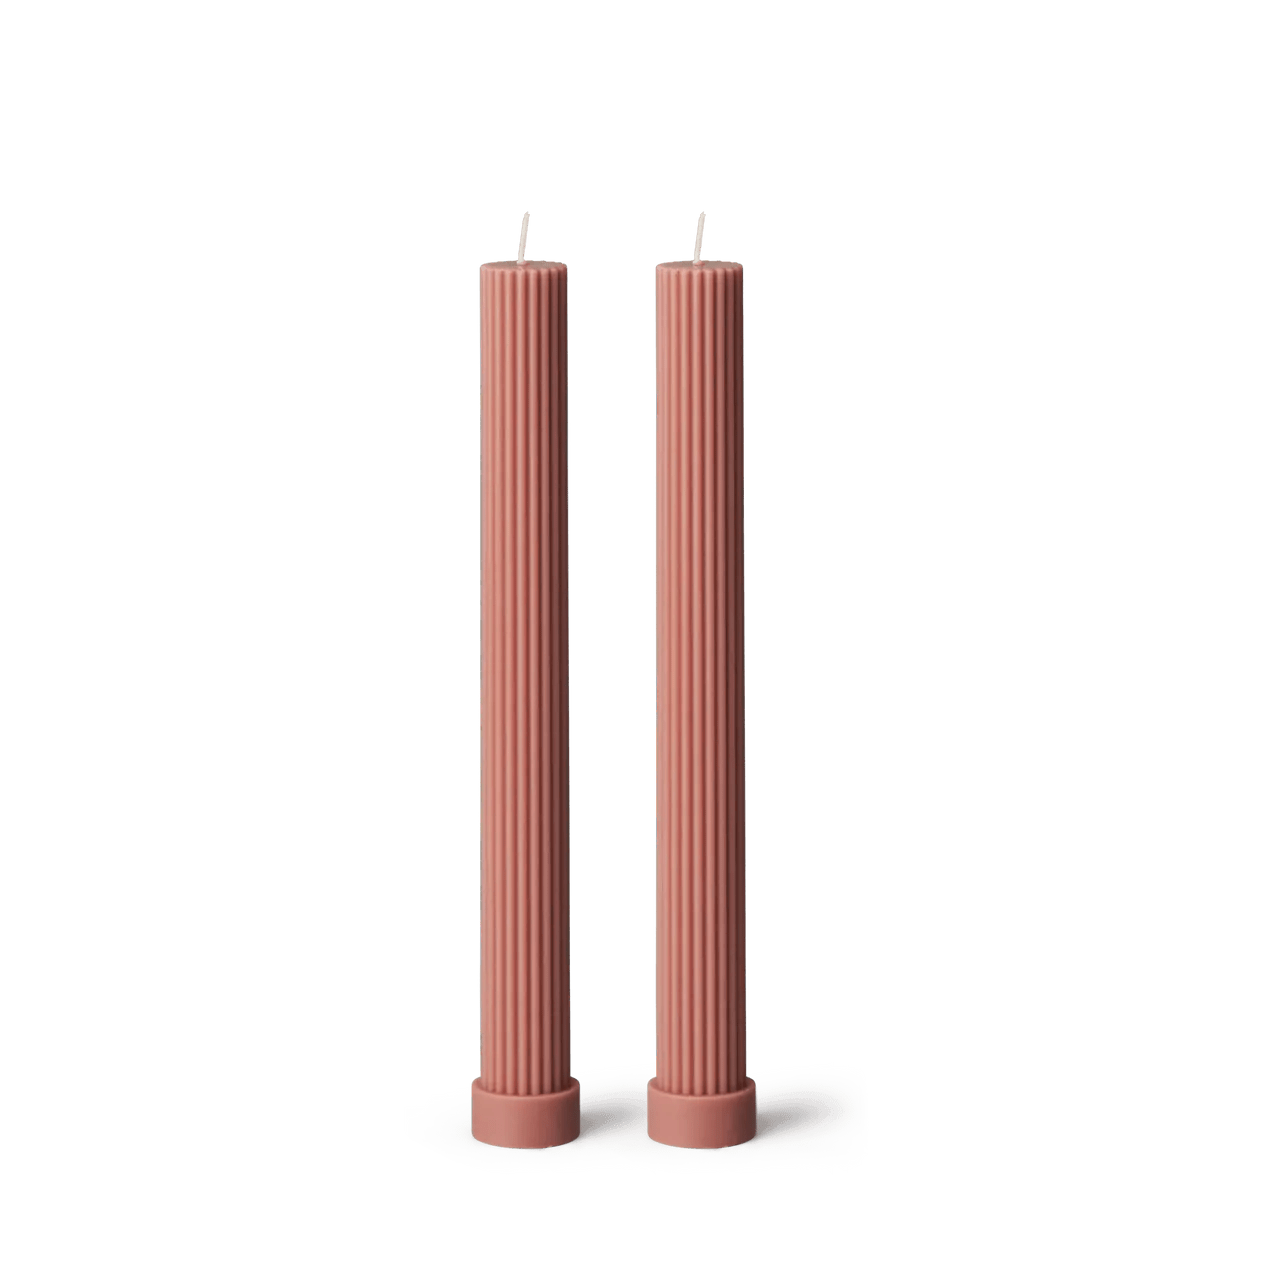 Column Pillar Candle Duo / Peach by Black Blaze